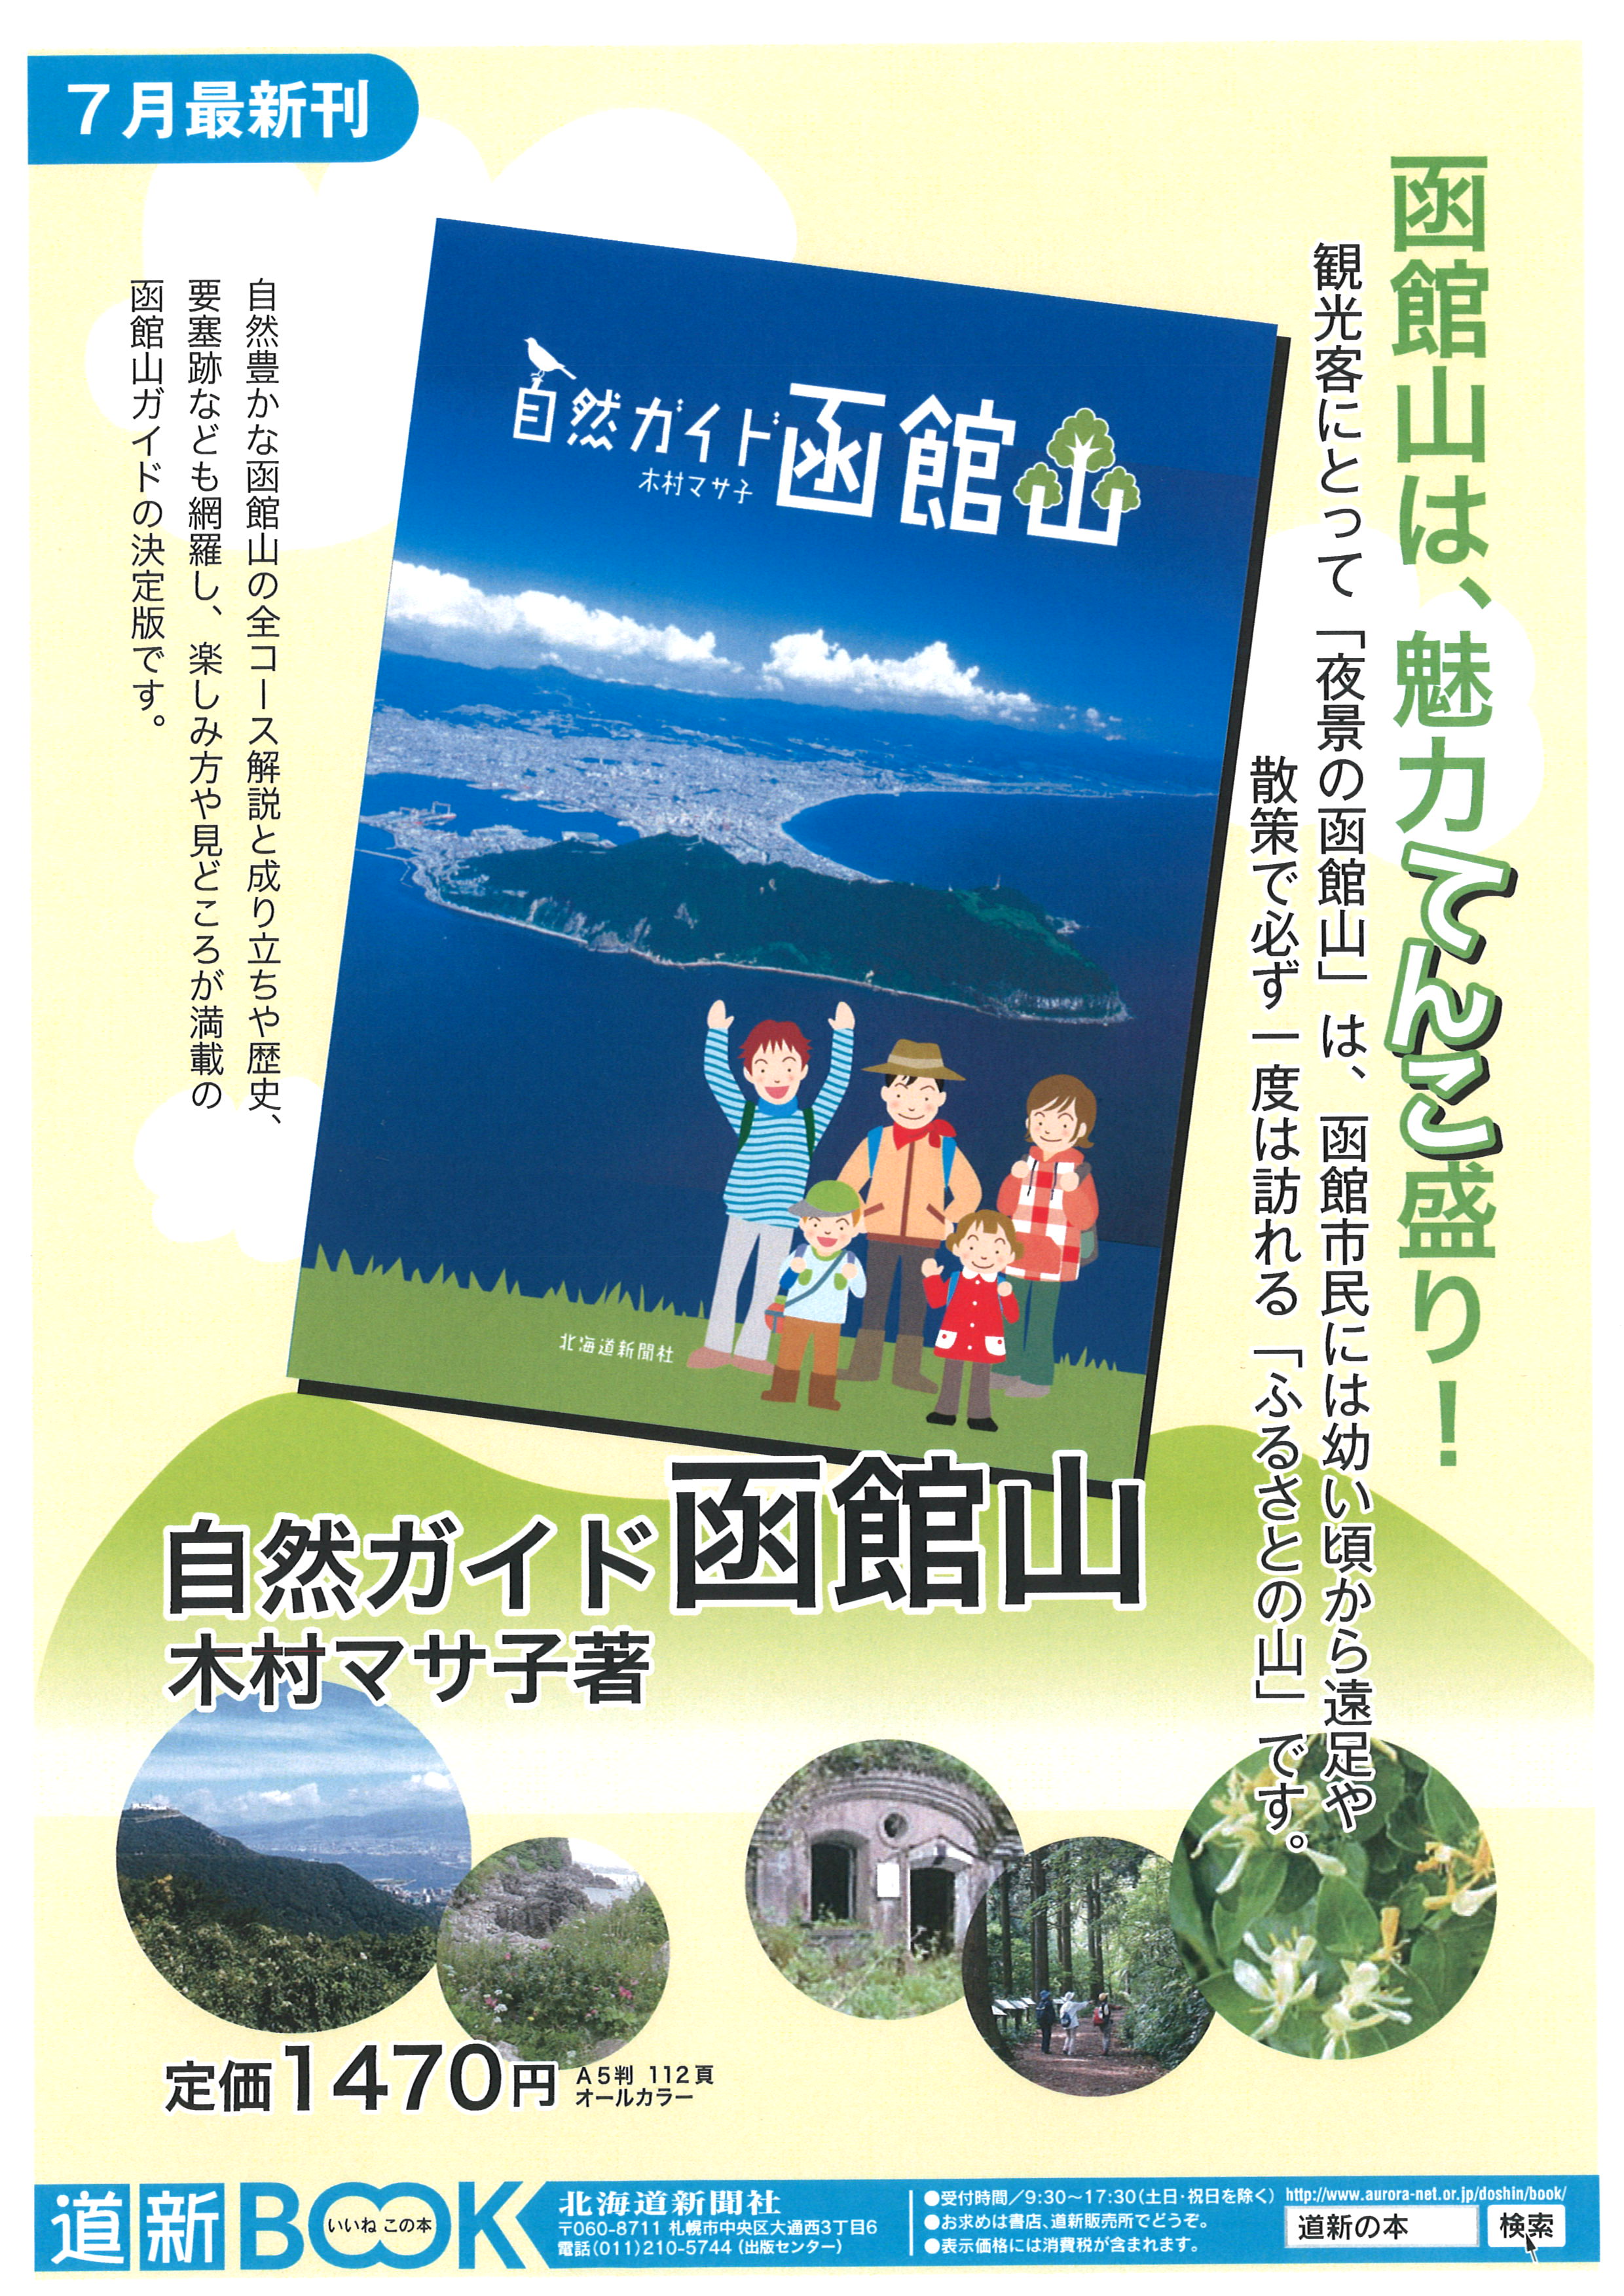 http://www.hakomachi.com/diary/images/20110711193655_00001.jpg